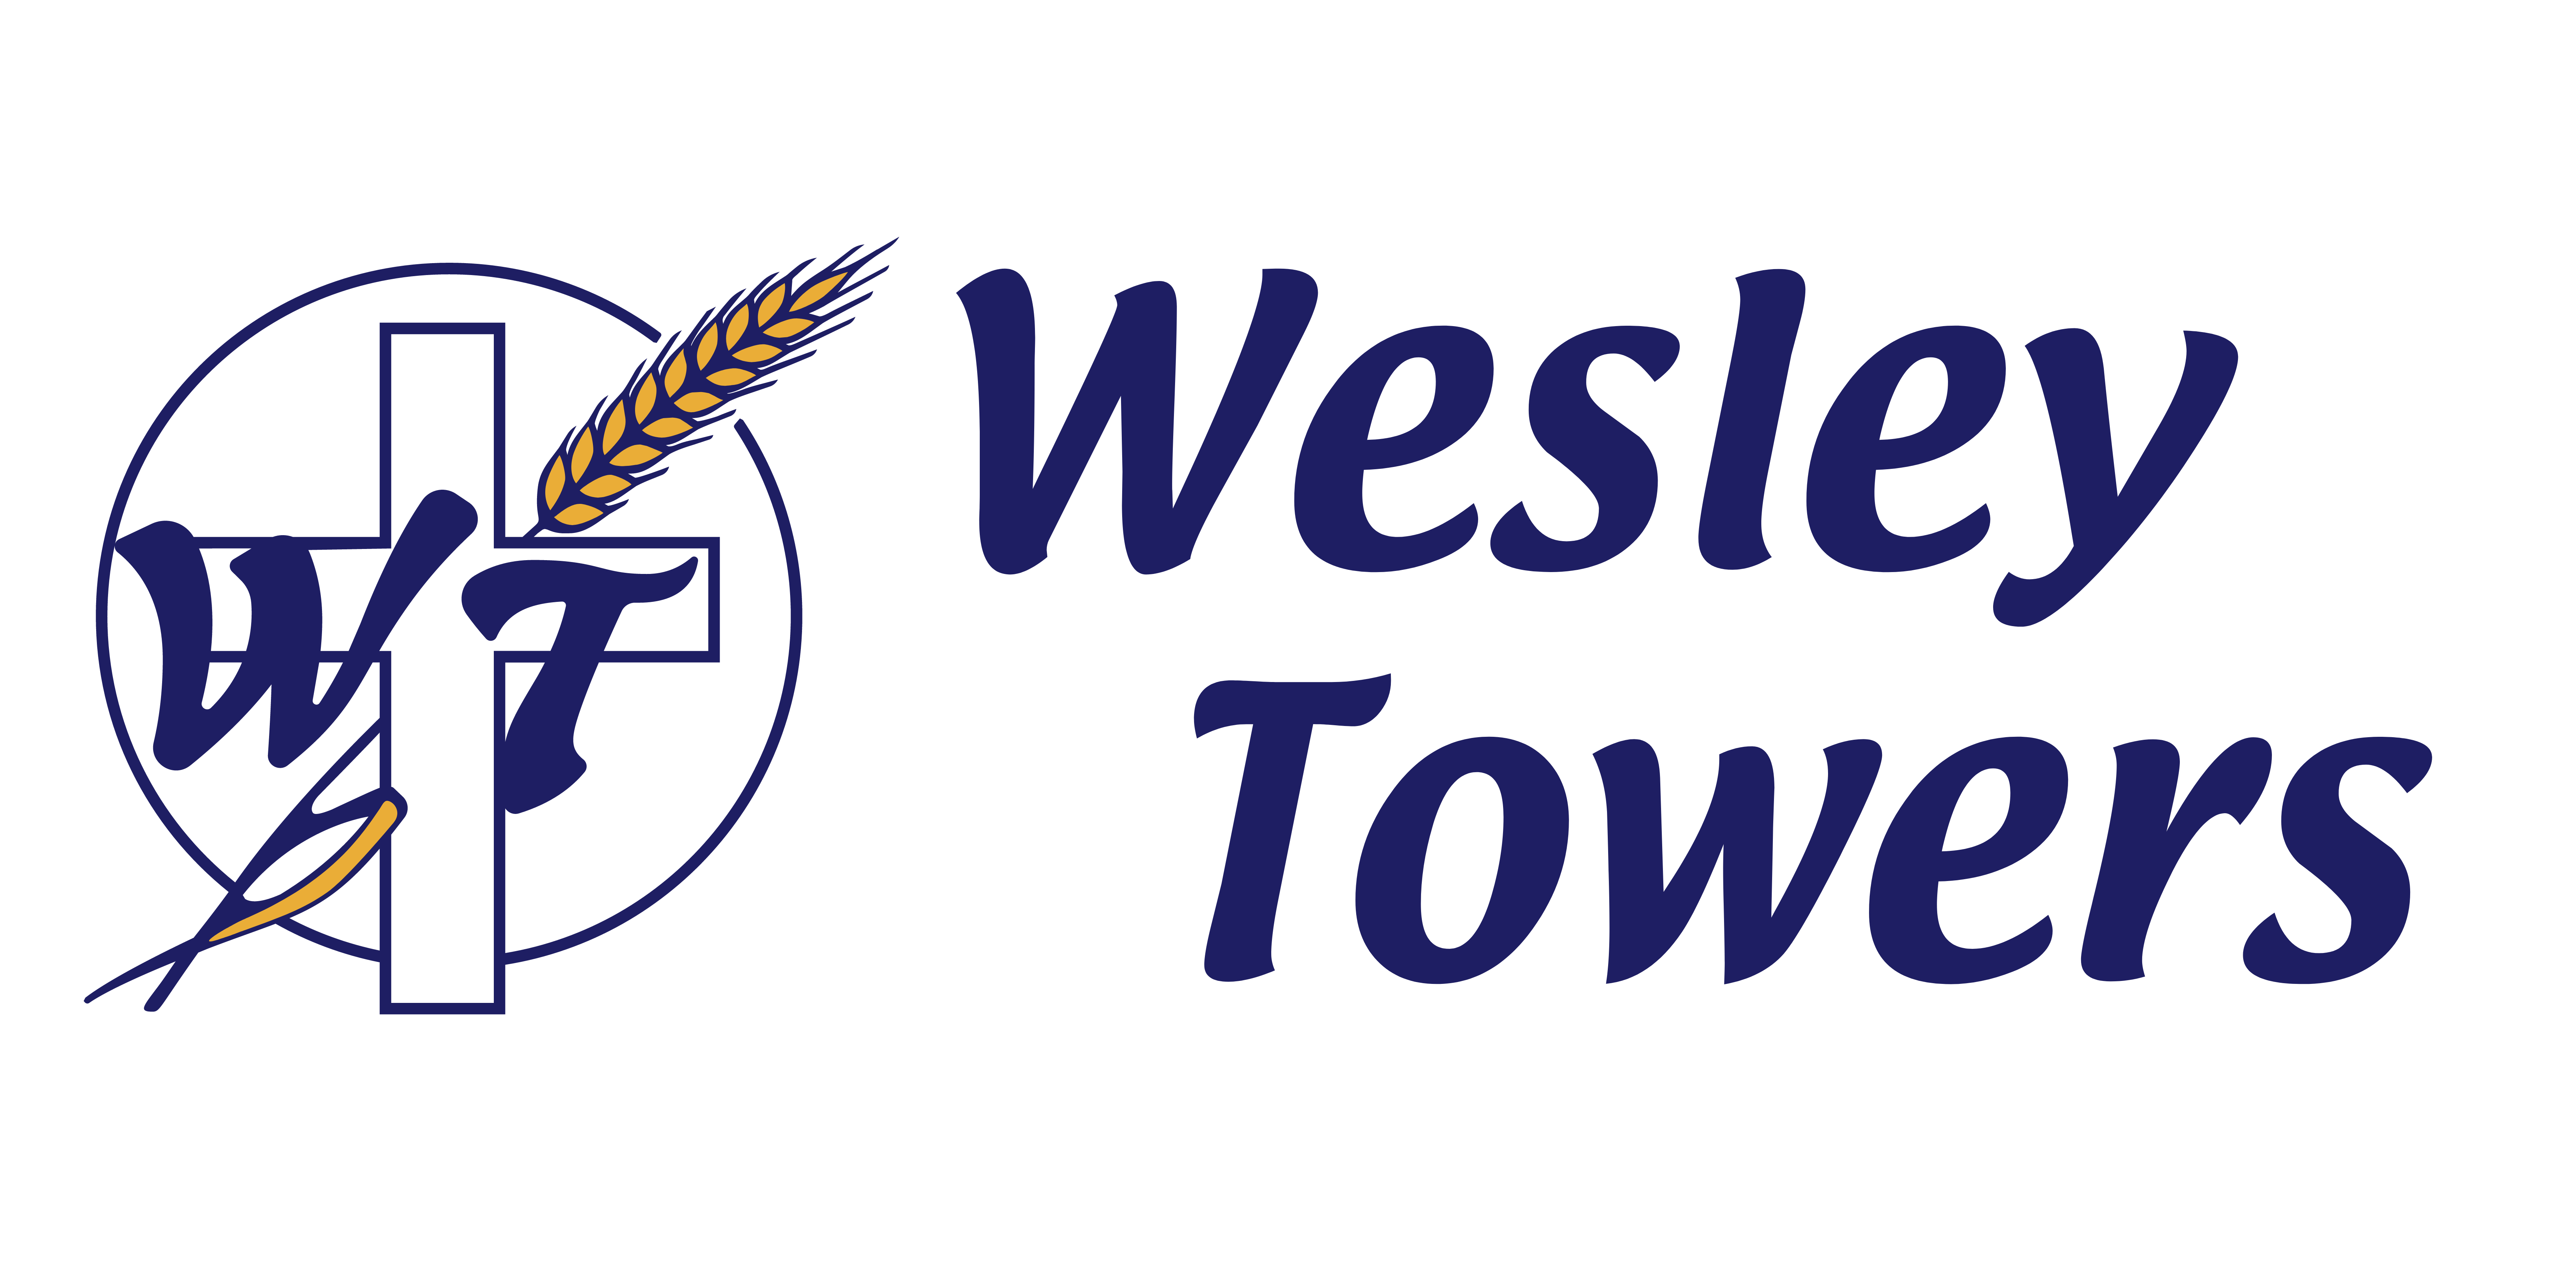 C. Wesley Towers (Tier 3)